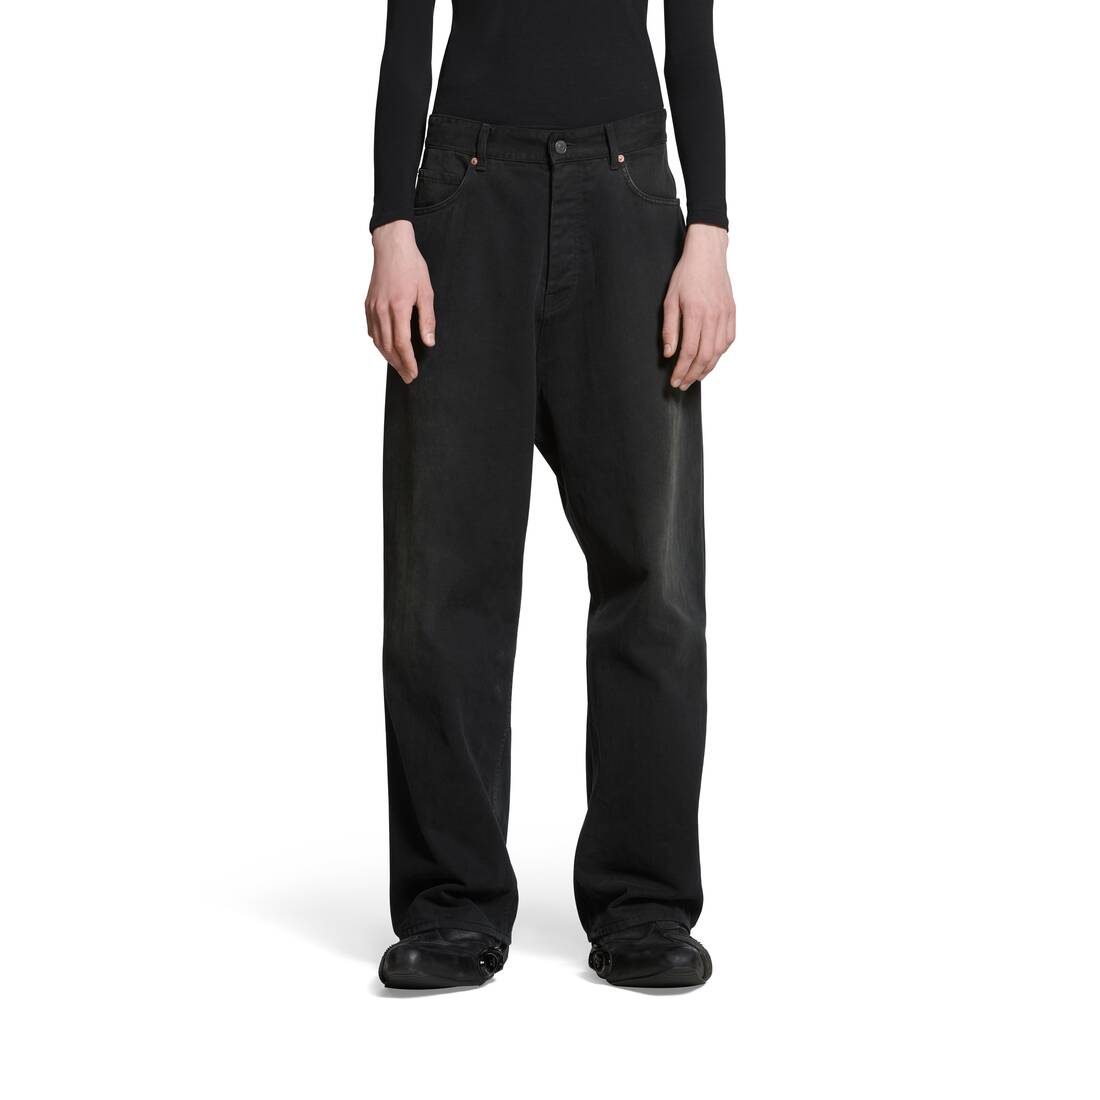 Balenciaga Slacks Pants, Designer code: 706623TIT17